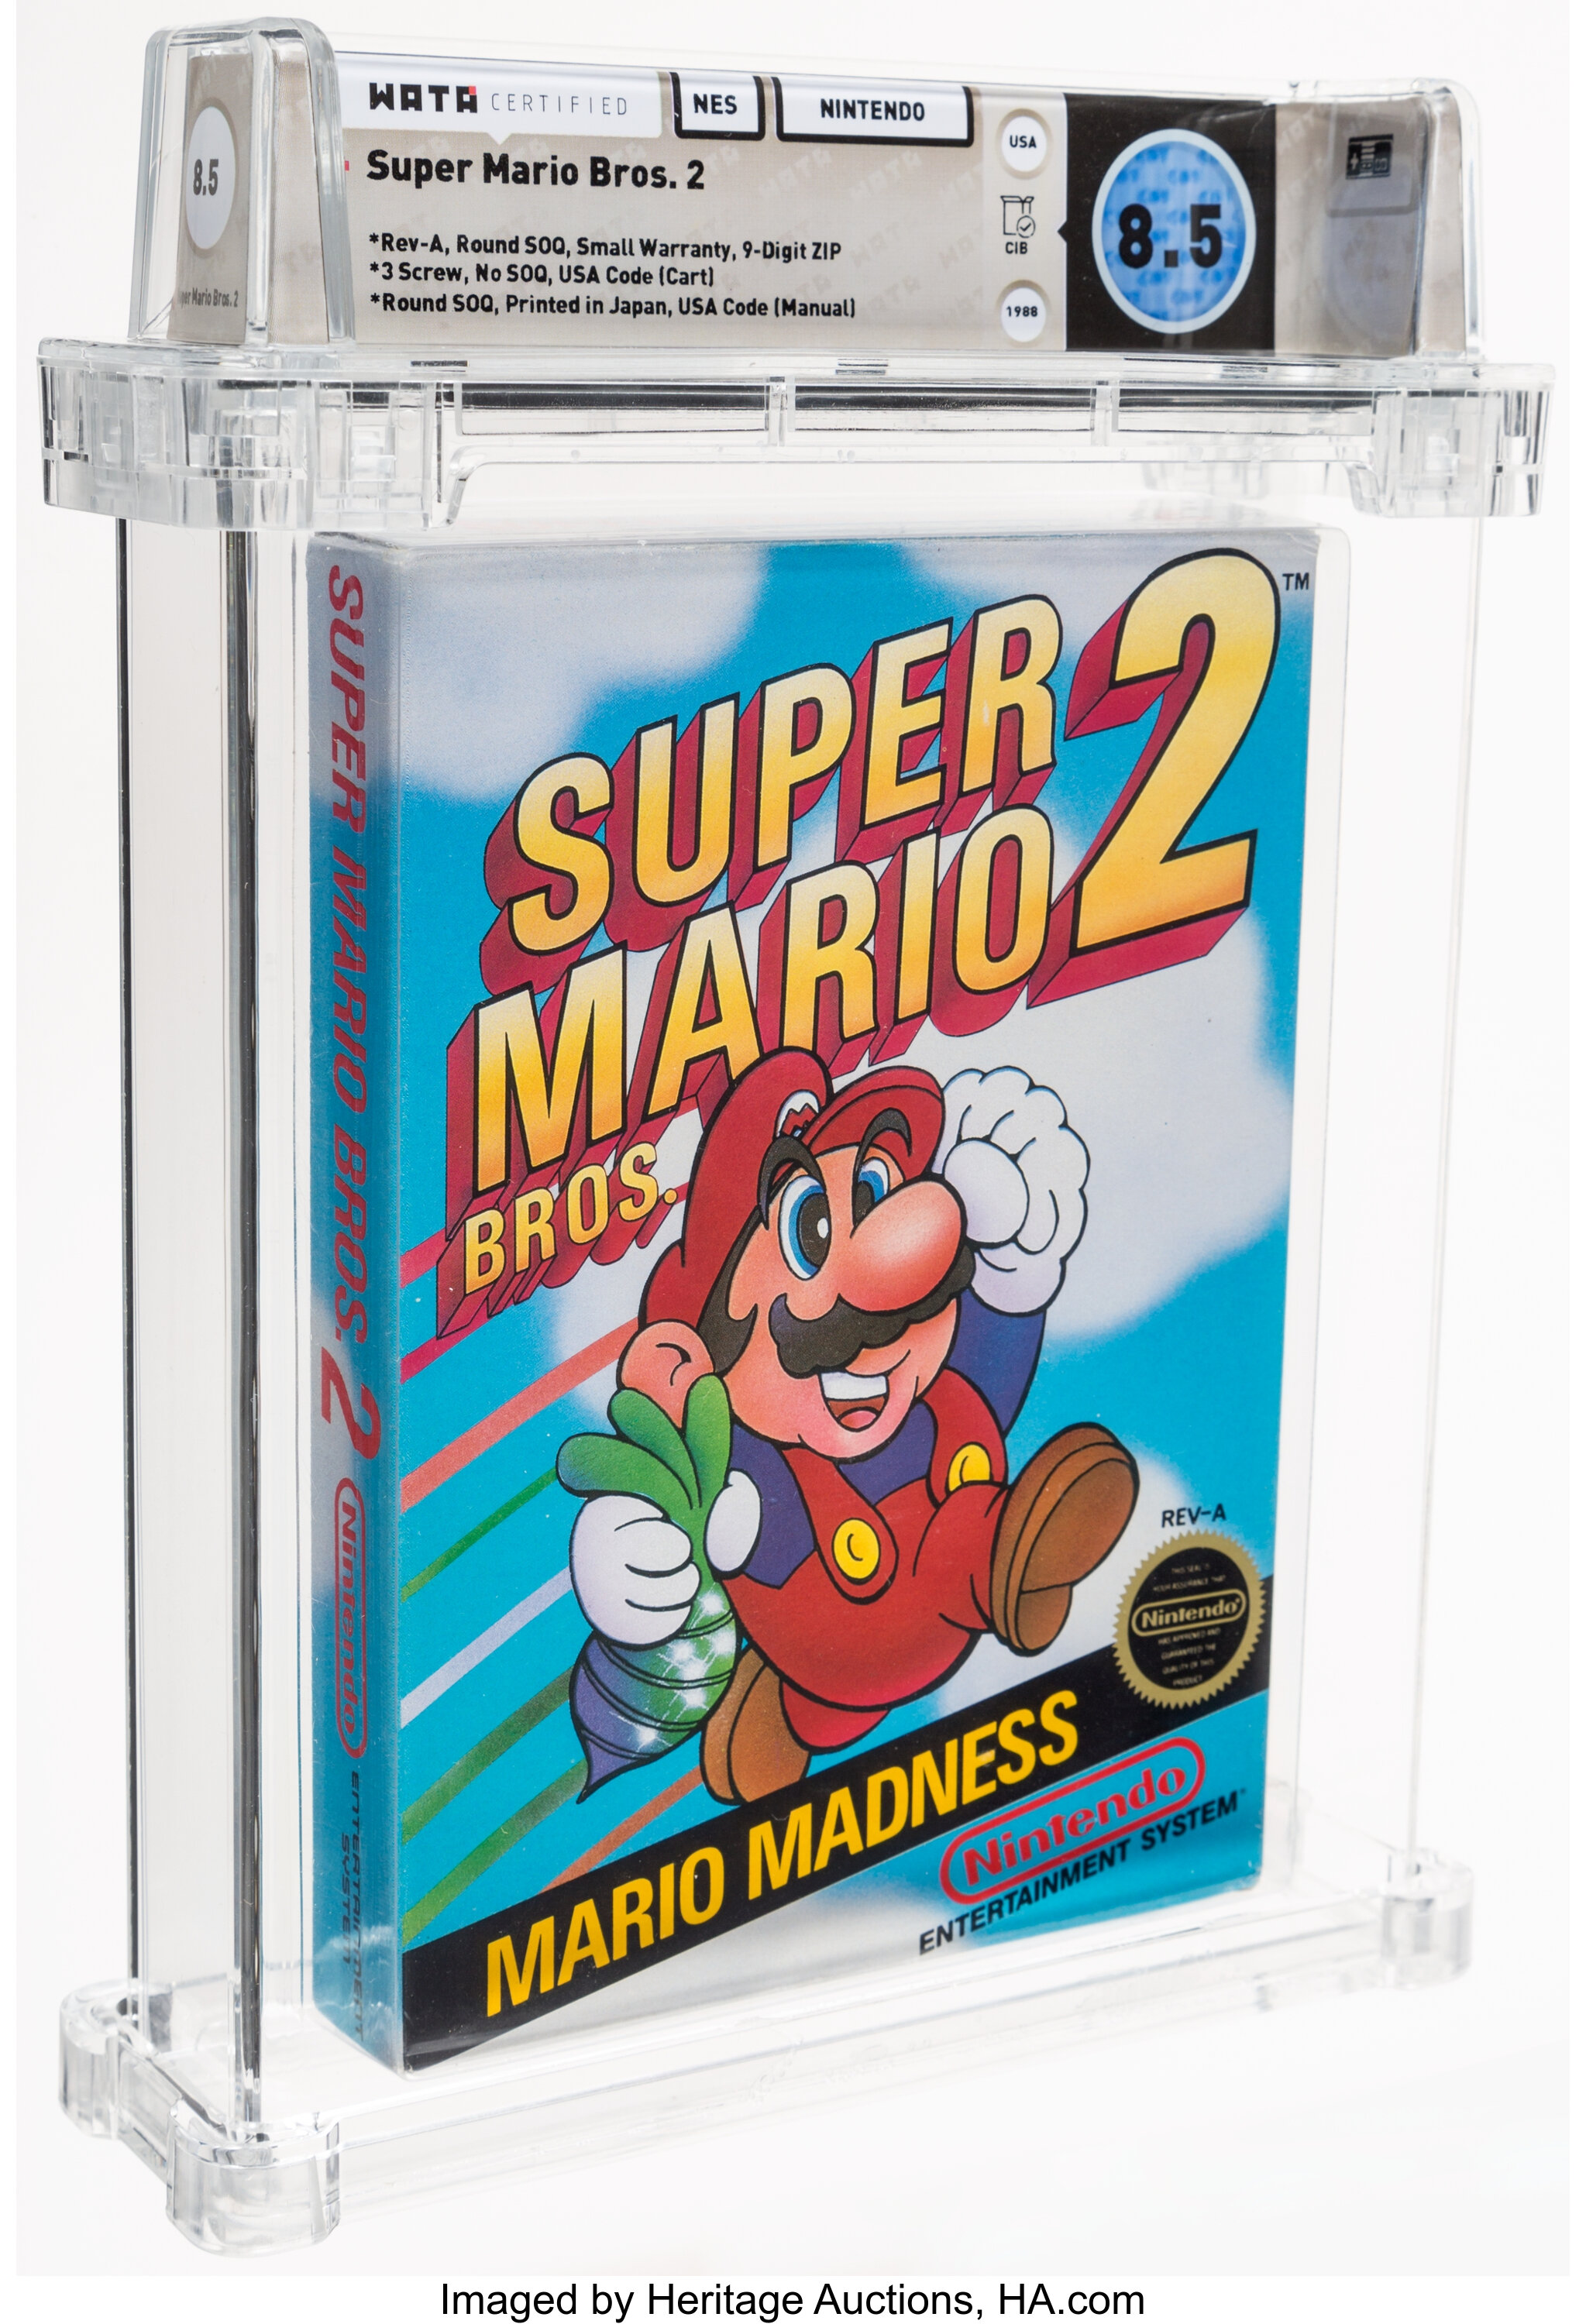 Super Mario Bros 2 Wata 8 5 Cib Rev A Round Soq Nes Lotid 25007 Heritage Auctions